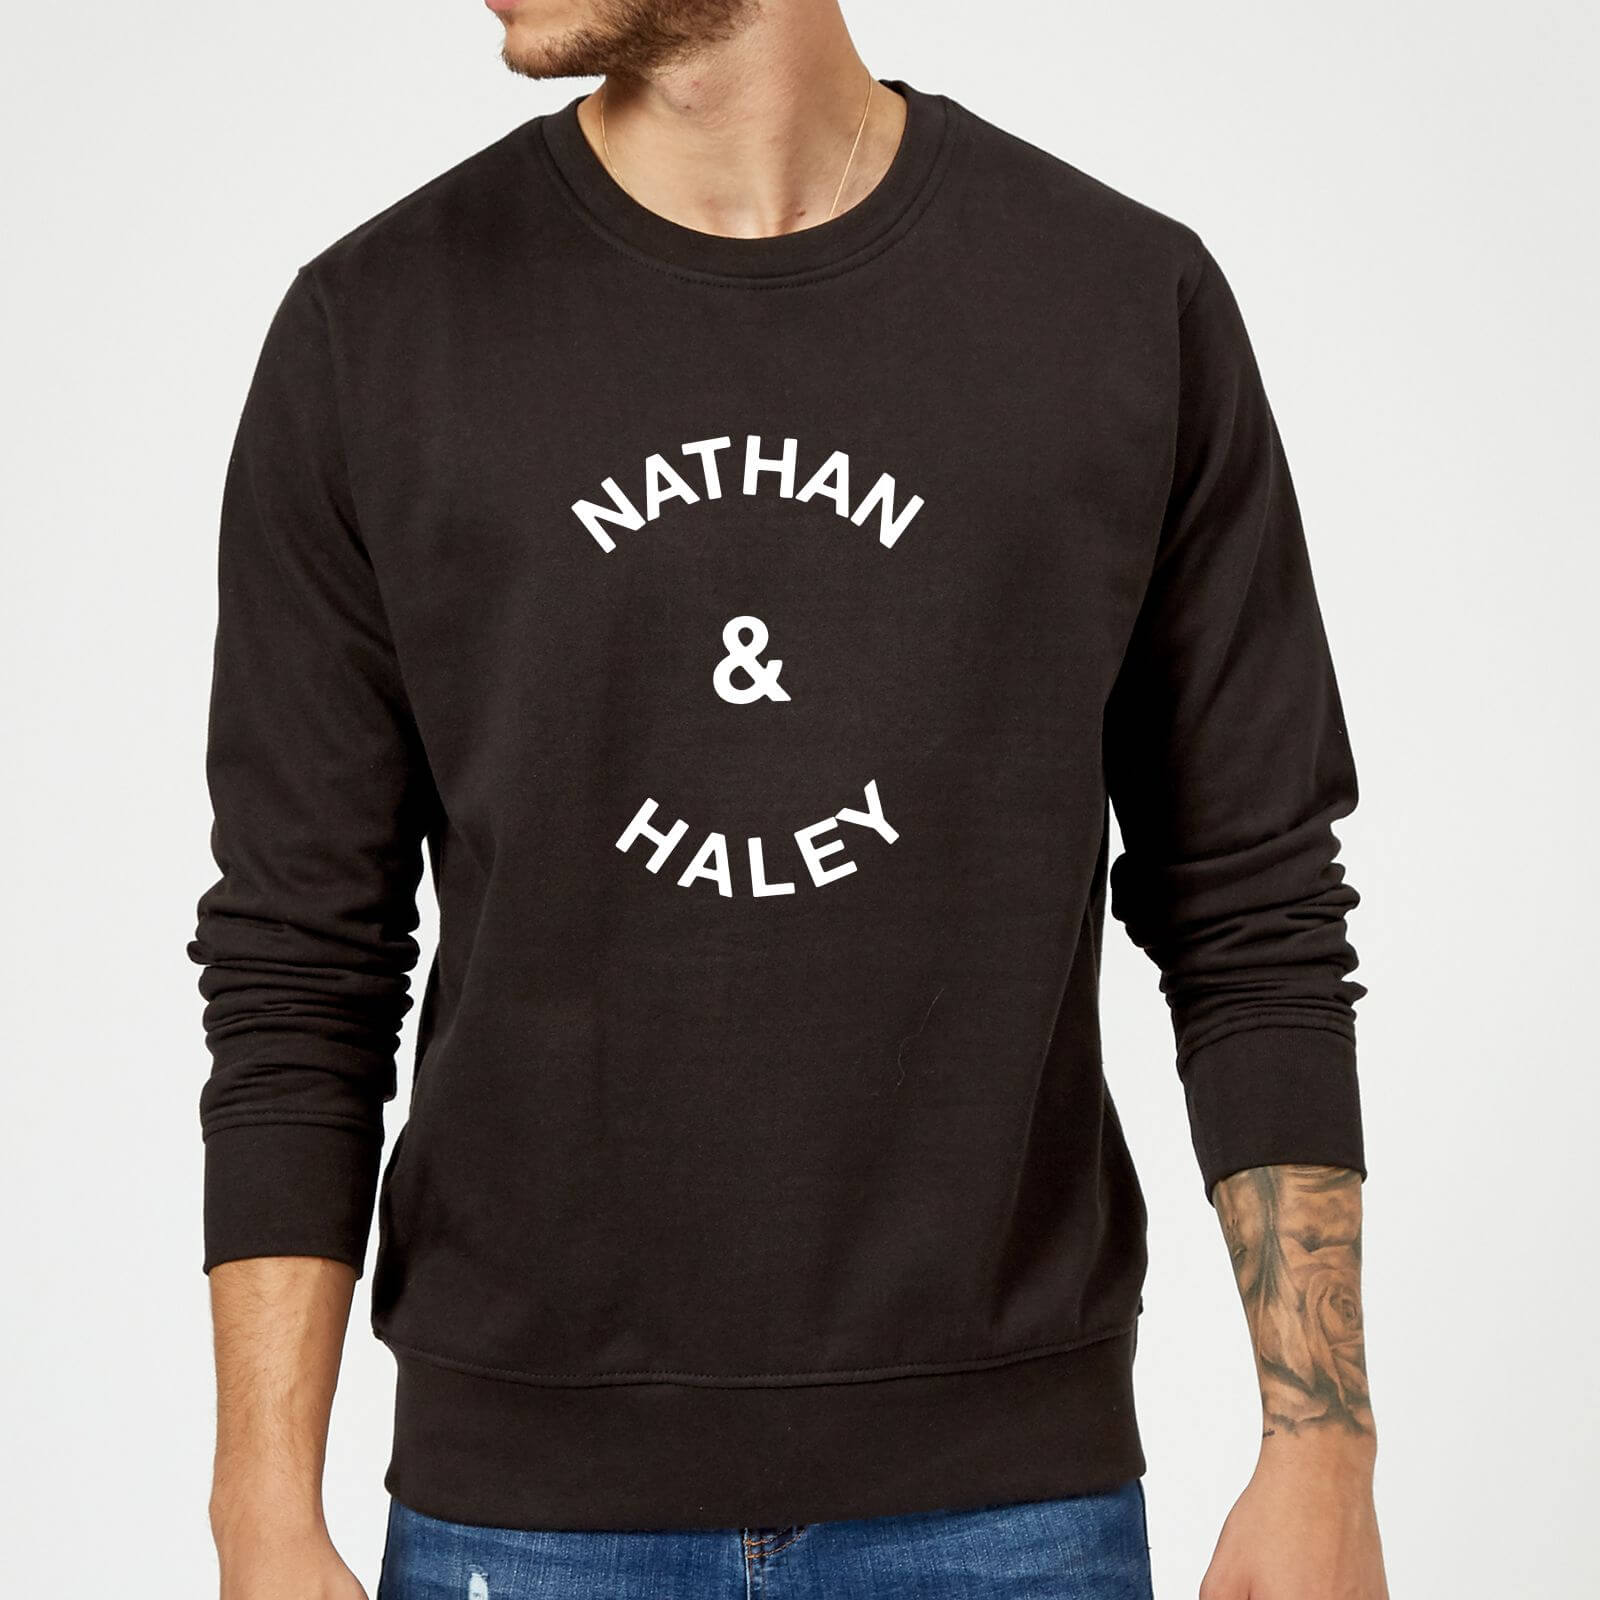 Nathan & Haley Sweatshirt - Black - L - Black